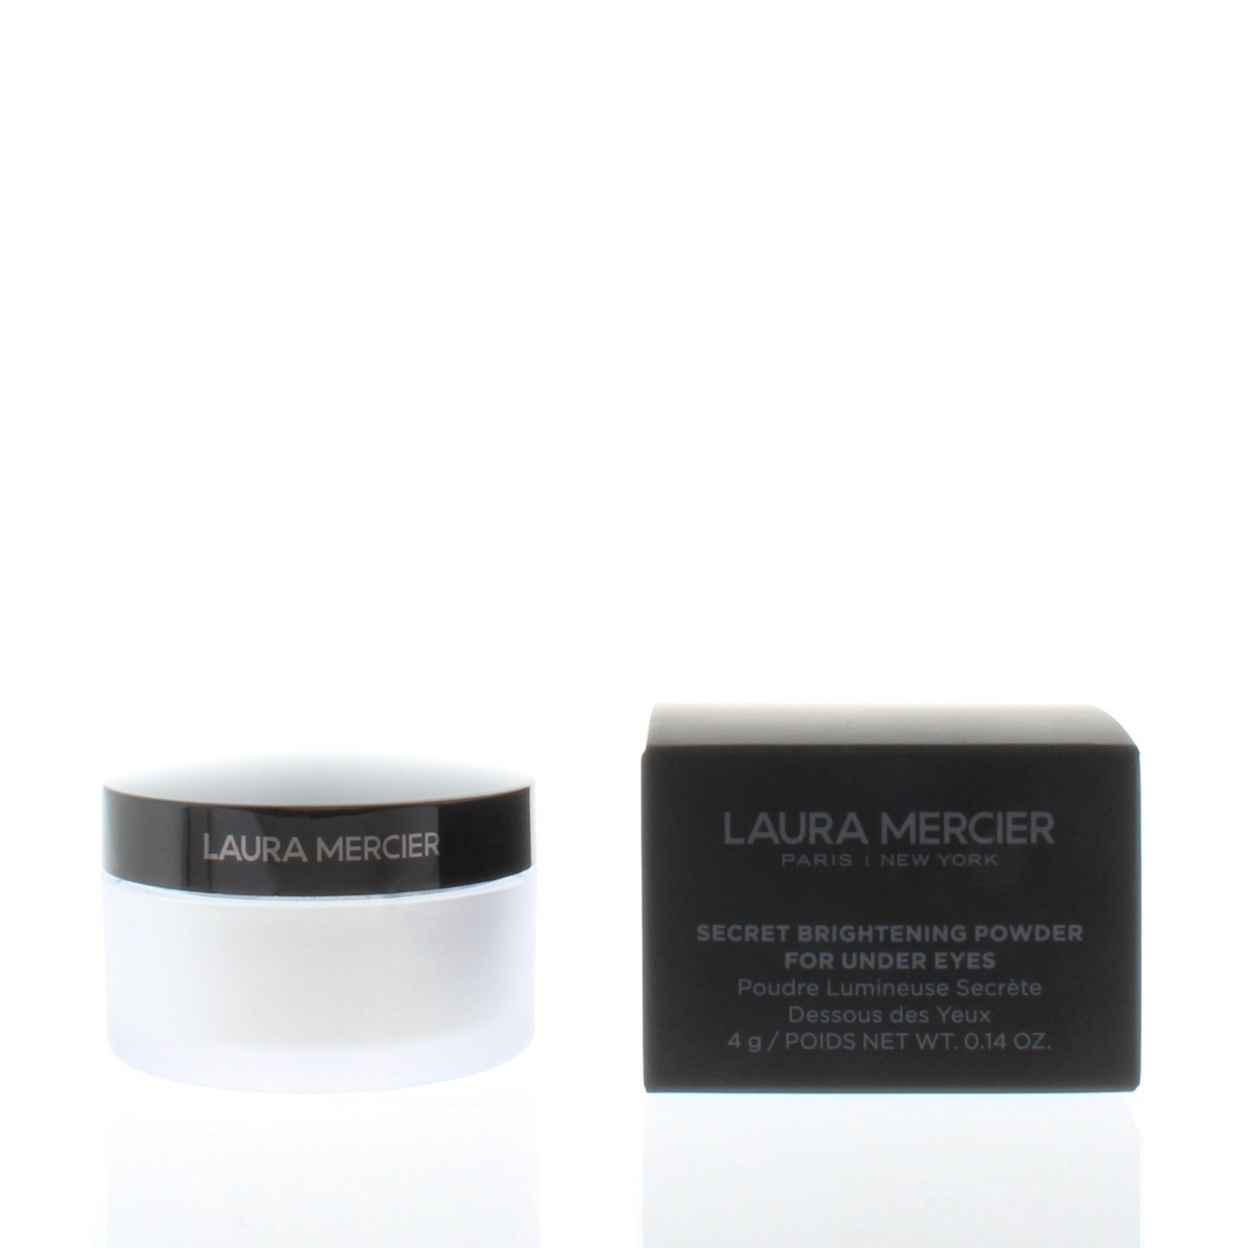 Laura Mercier Secret Brightening Powder For Under Eyes #1 4g/0.14oz